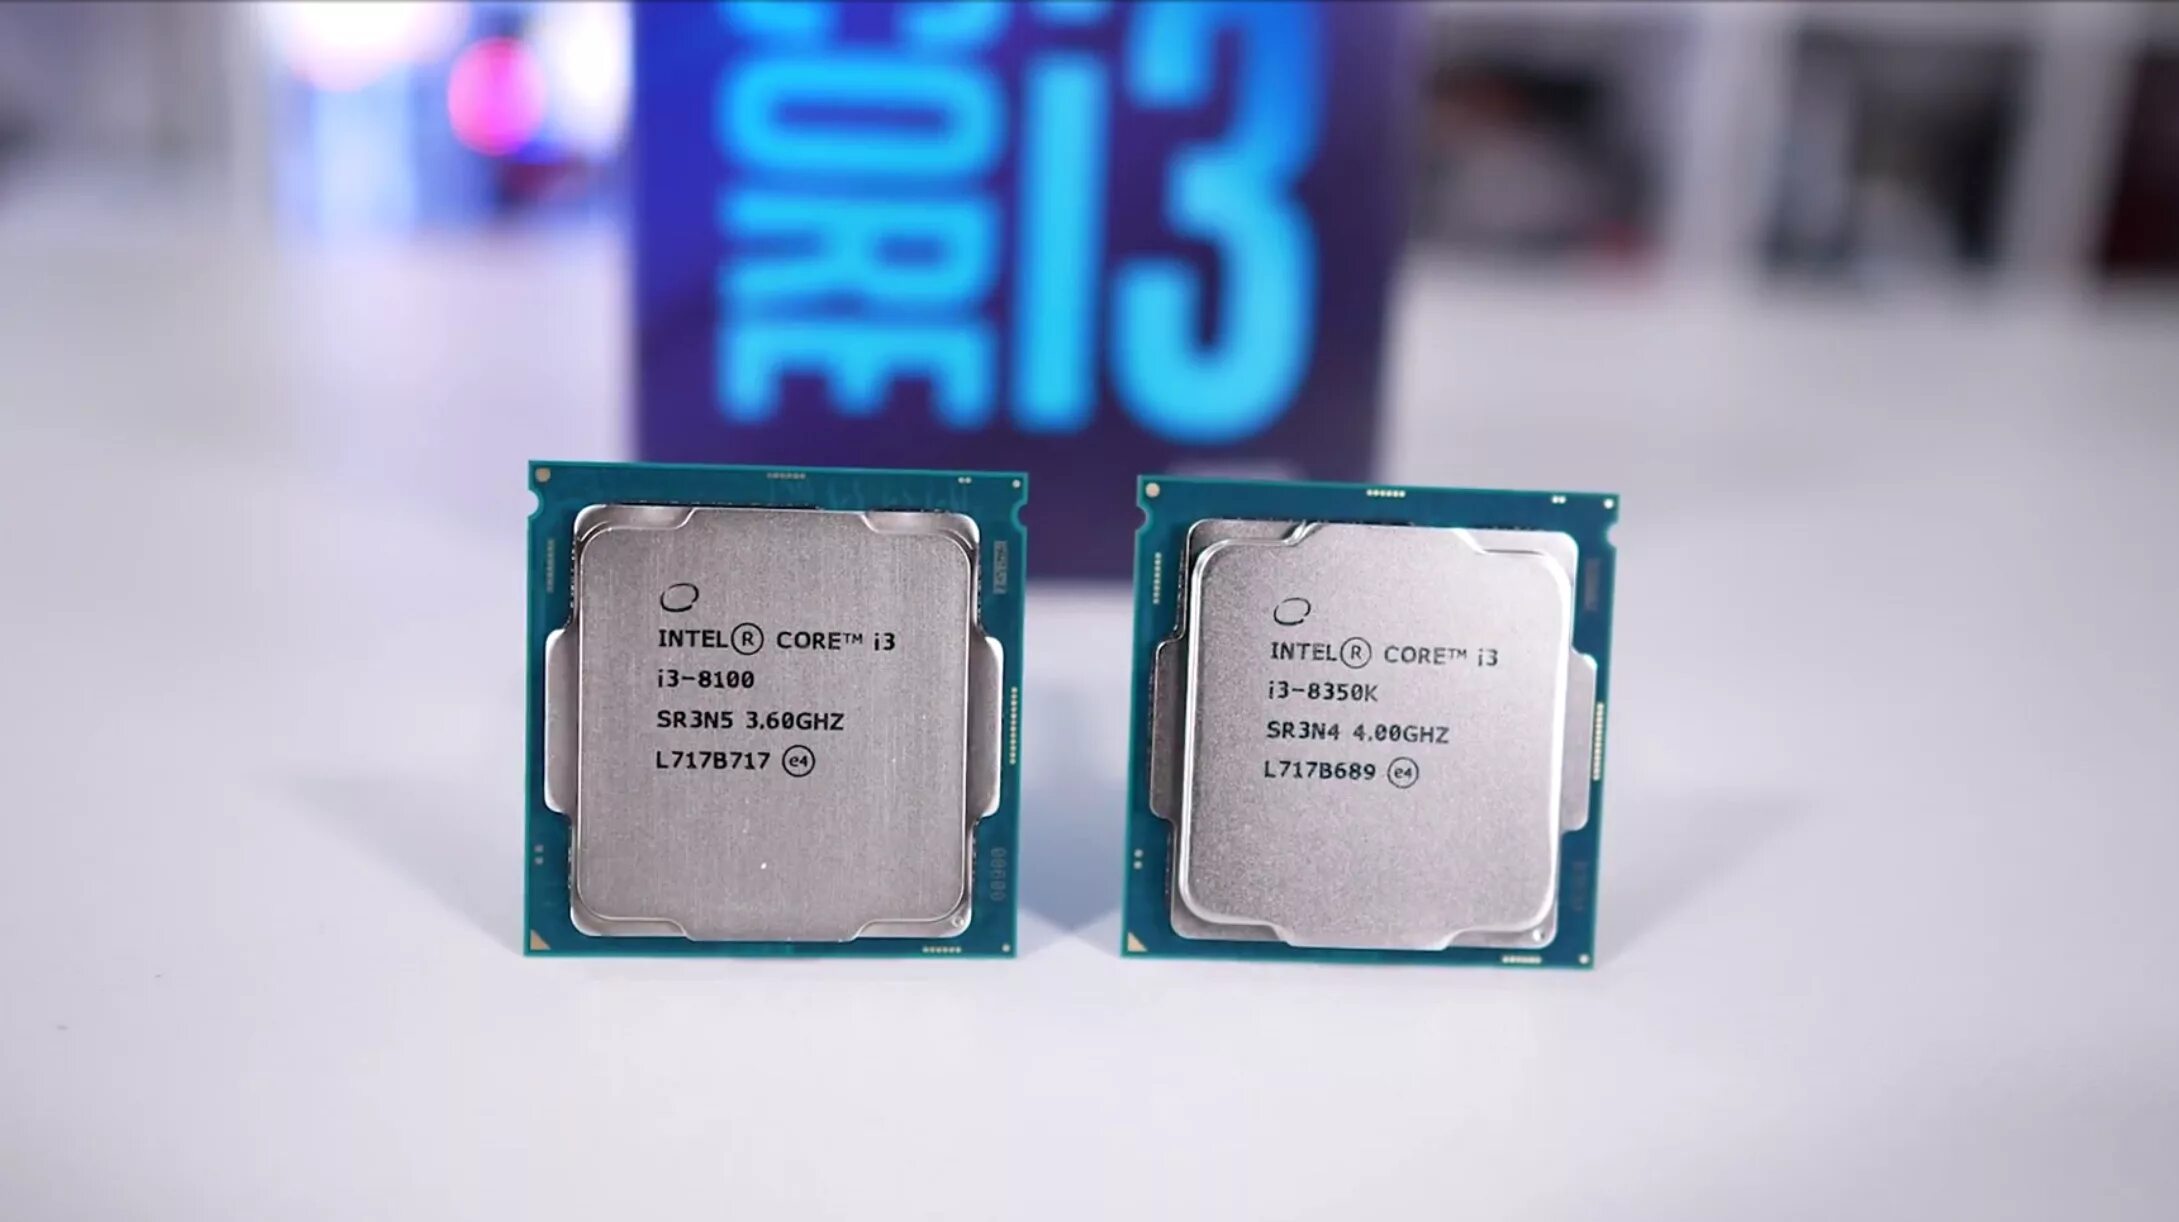 Core i3 8100. Intel(r) Core(TM) i3-8100 CPU @ 3.60GHZ. Intel Core i3 Series. Intel Core i 3 3.60 GHZ. Интел 8100